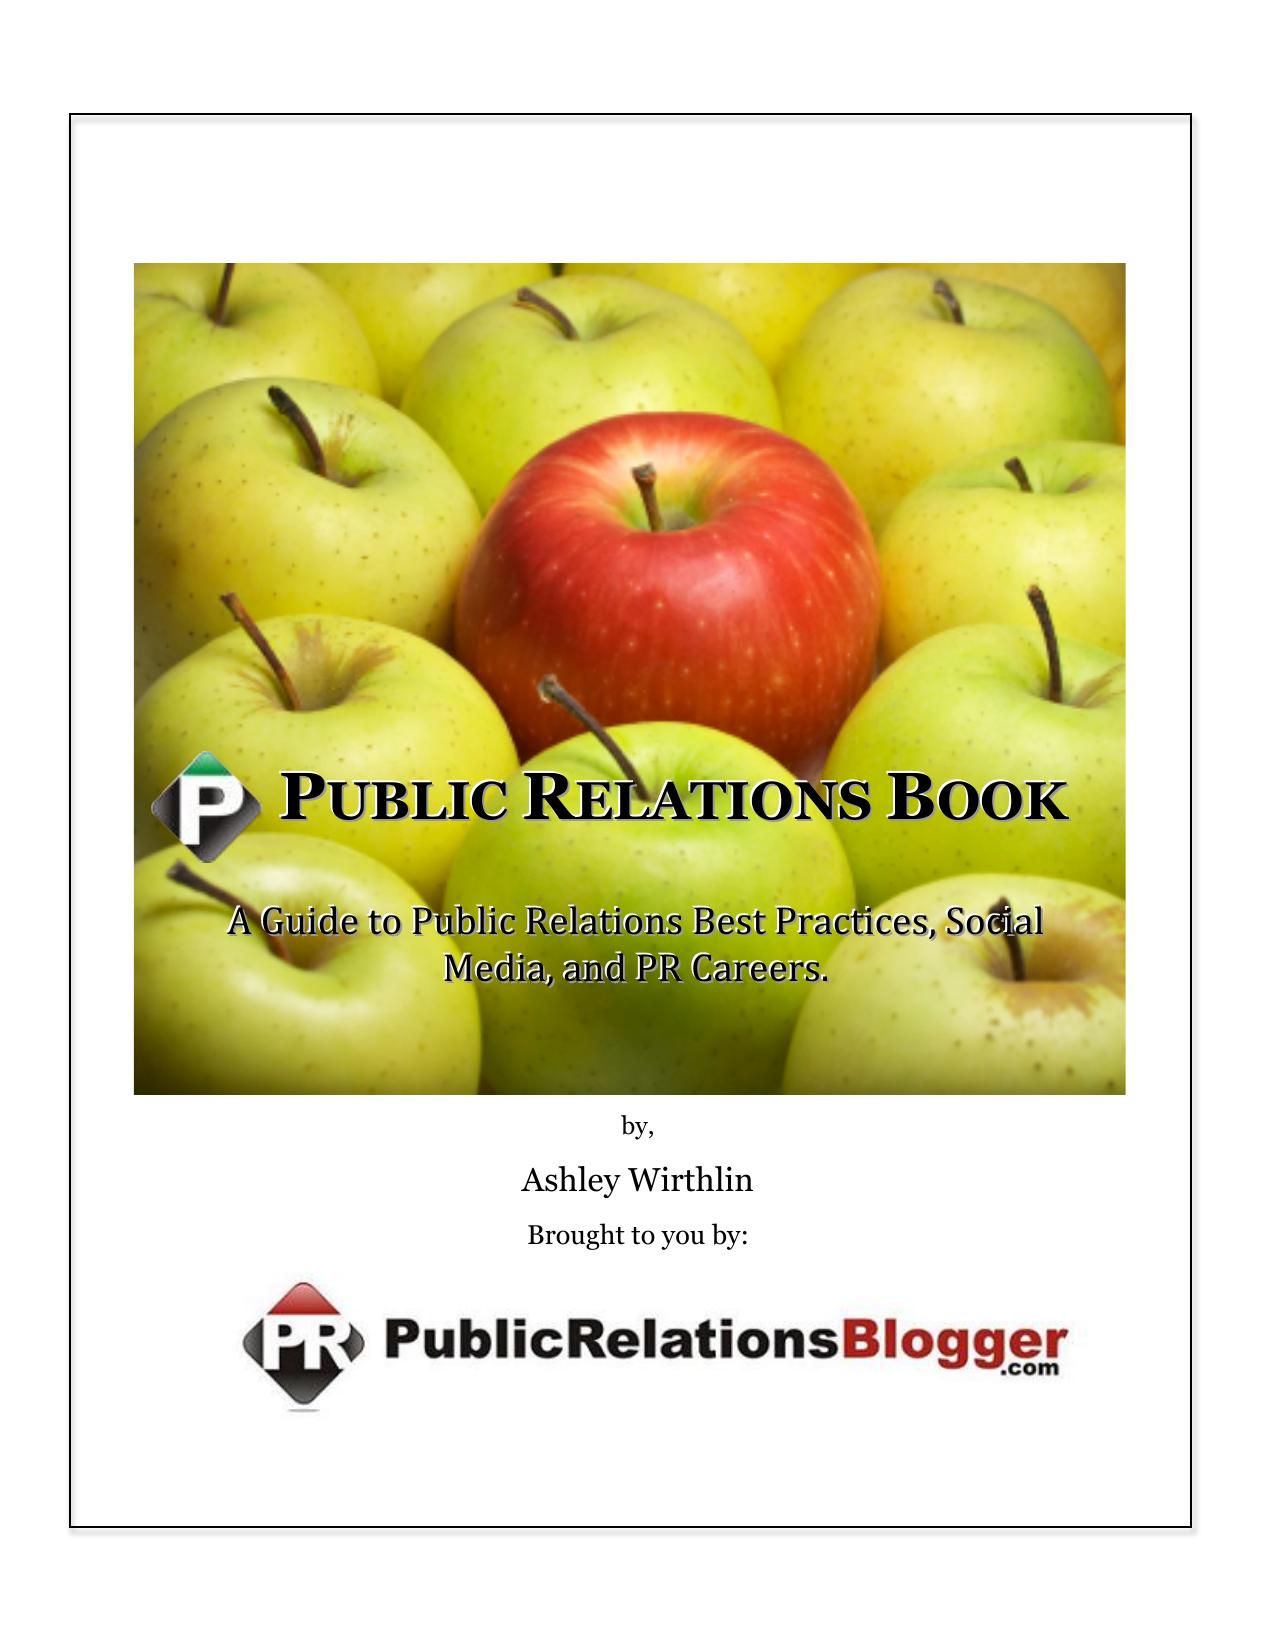 Microsoft Word - Public Relations Blogger E-Book.docx